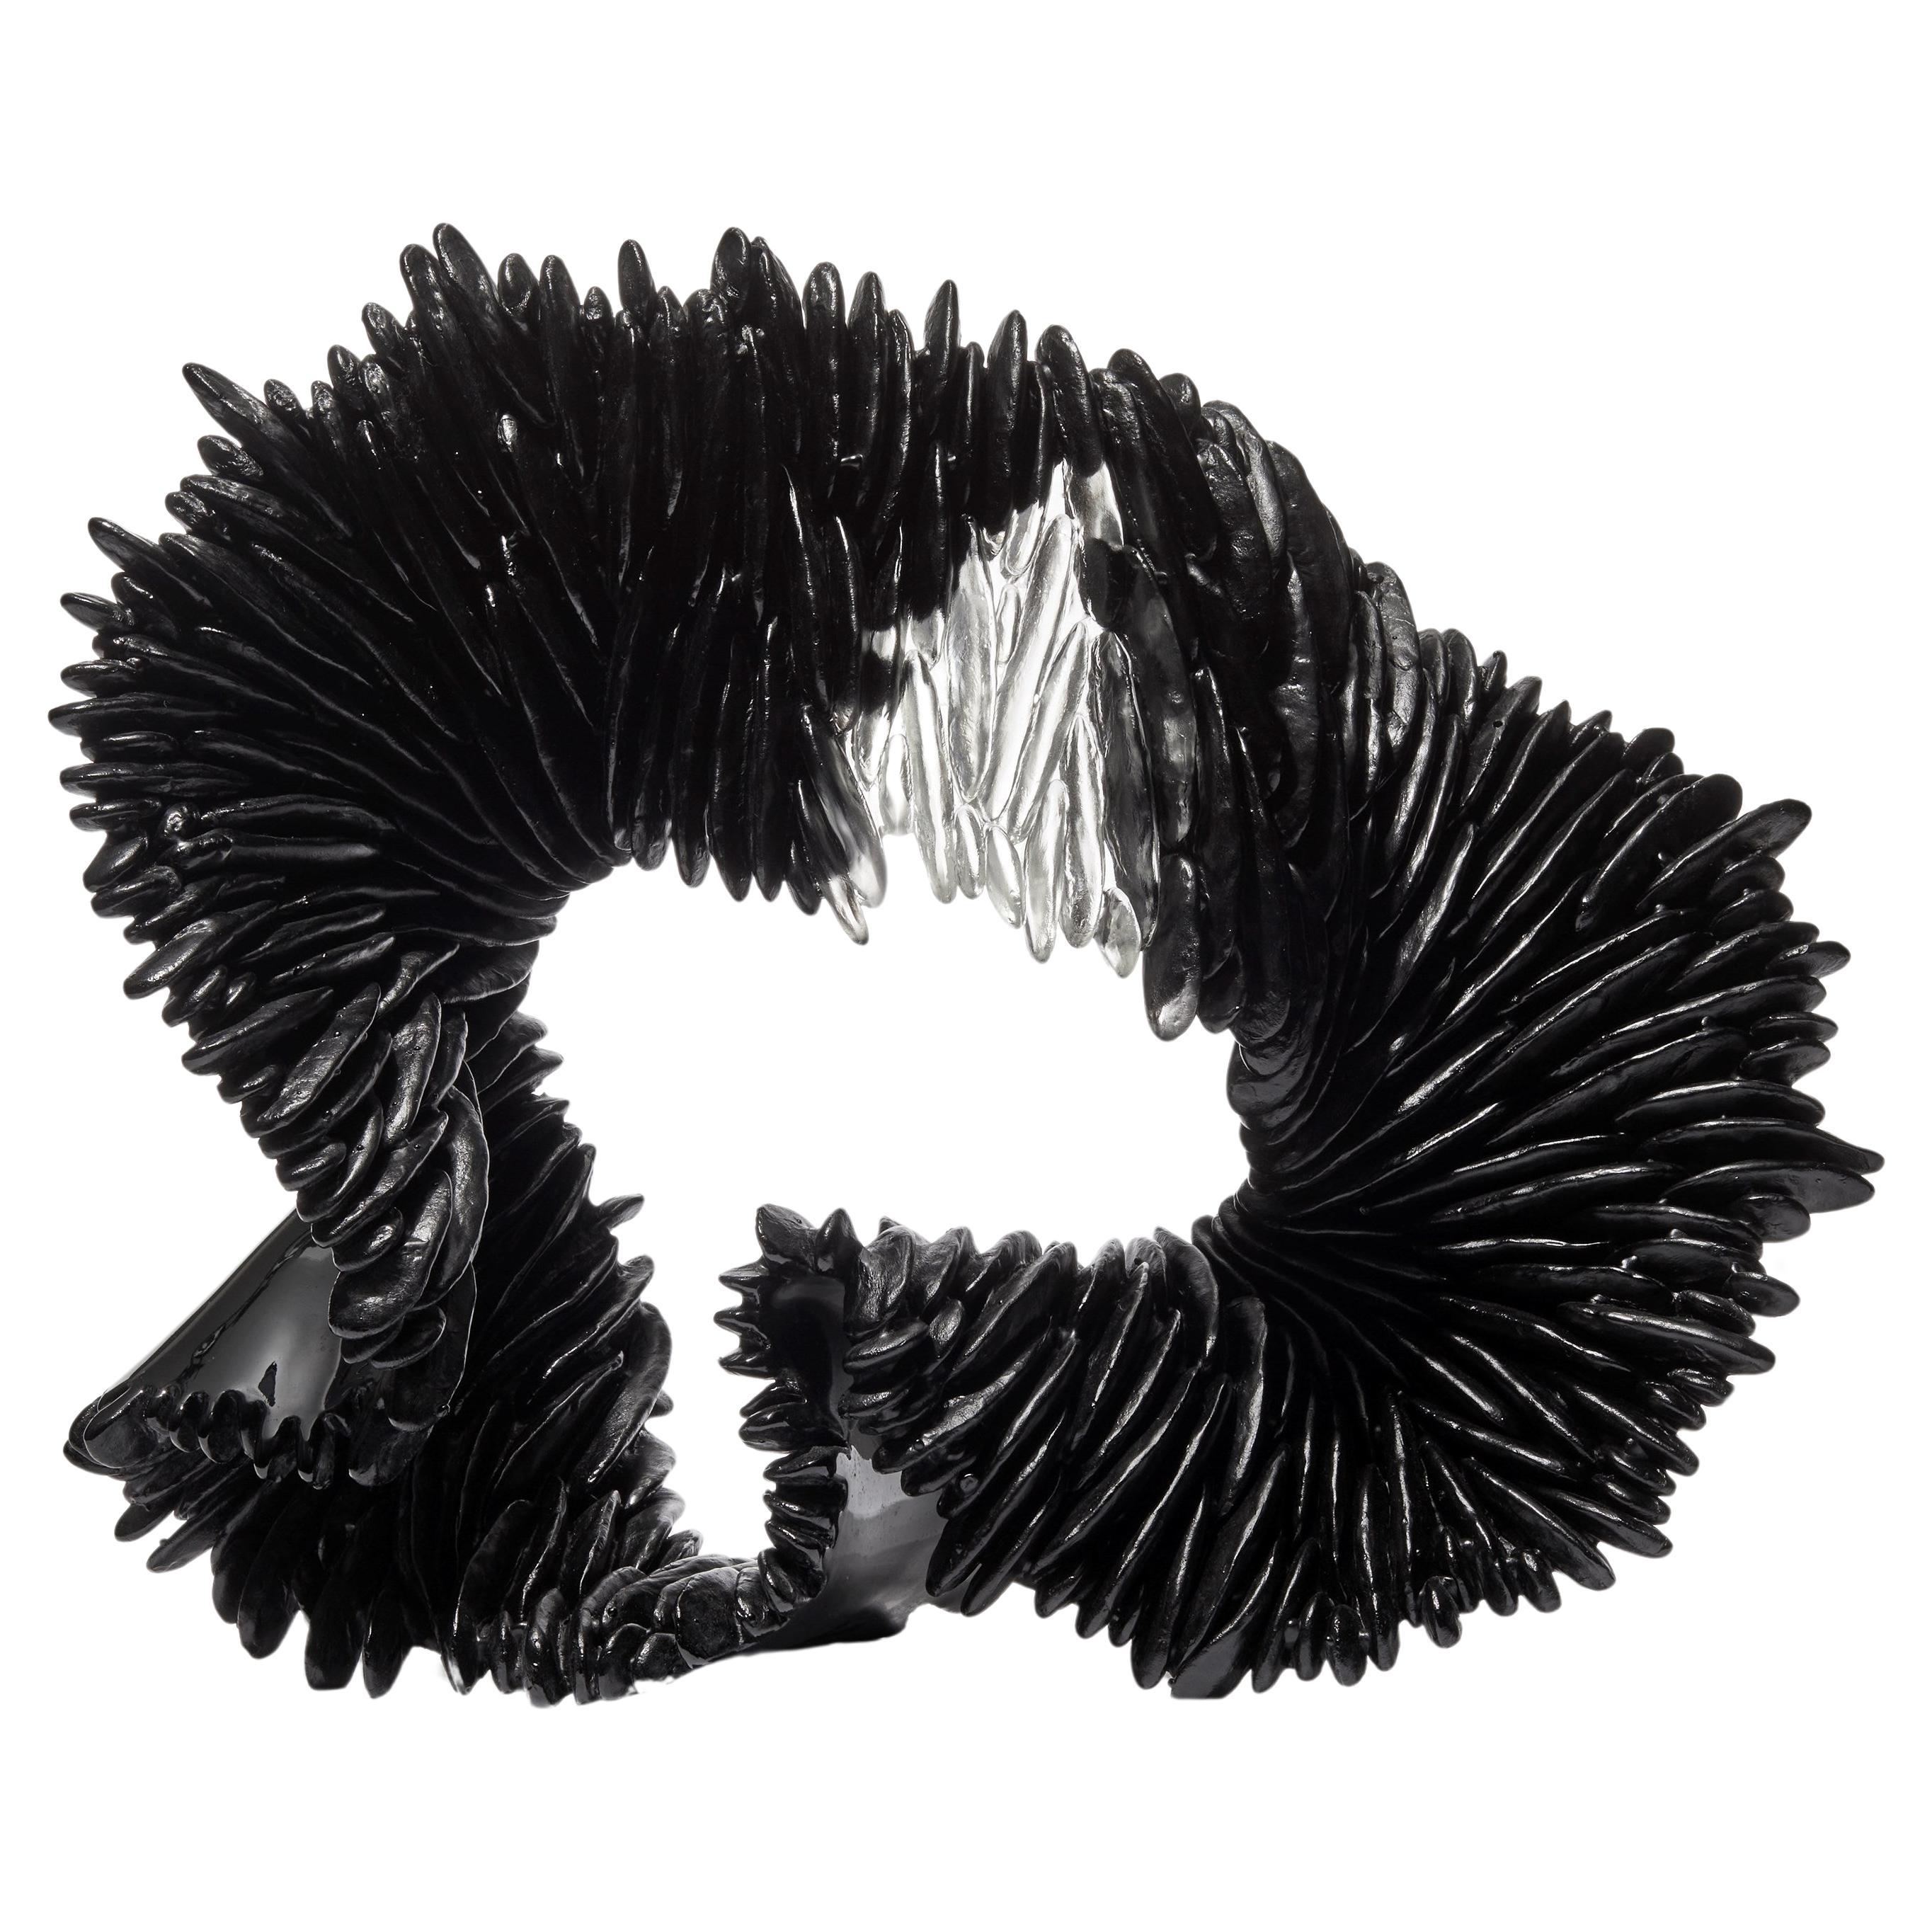  Black Lamellae, standing textured cast glass sculpture by Nina Casson McGarva